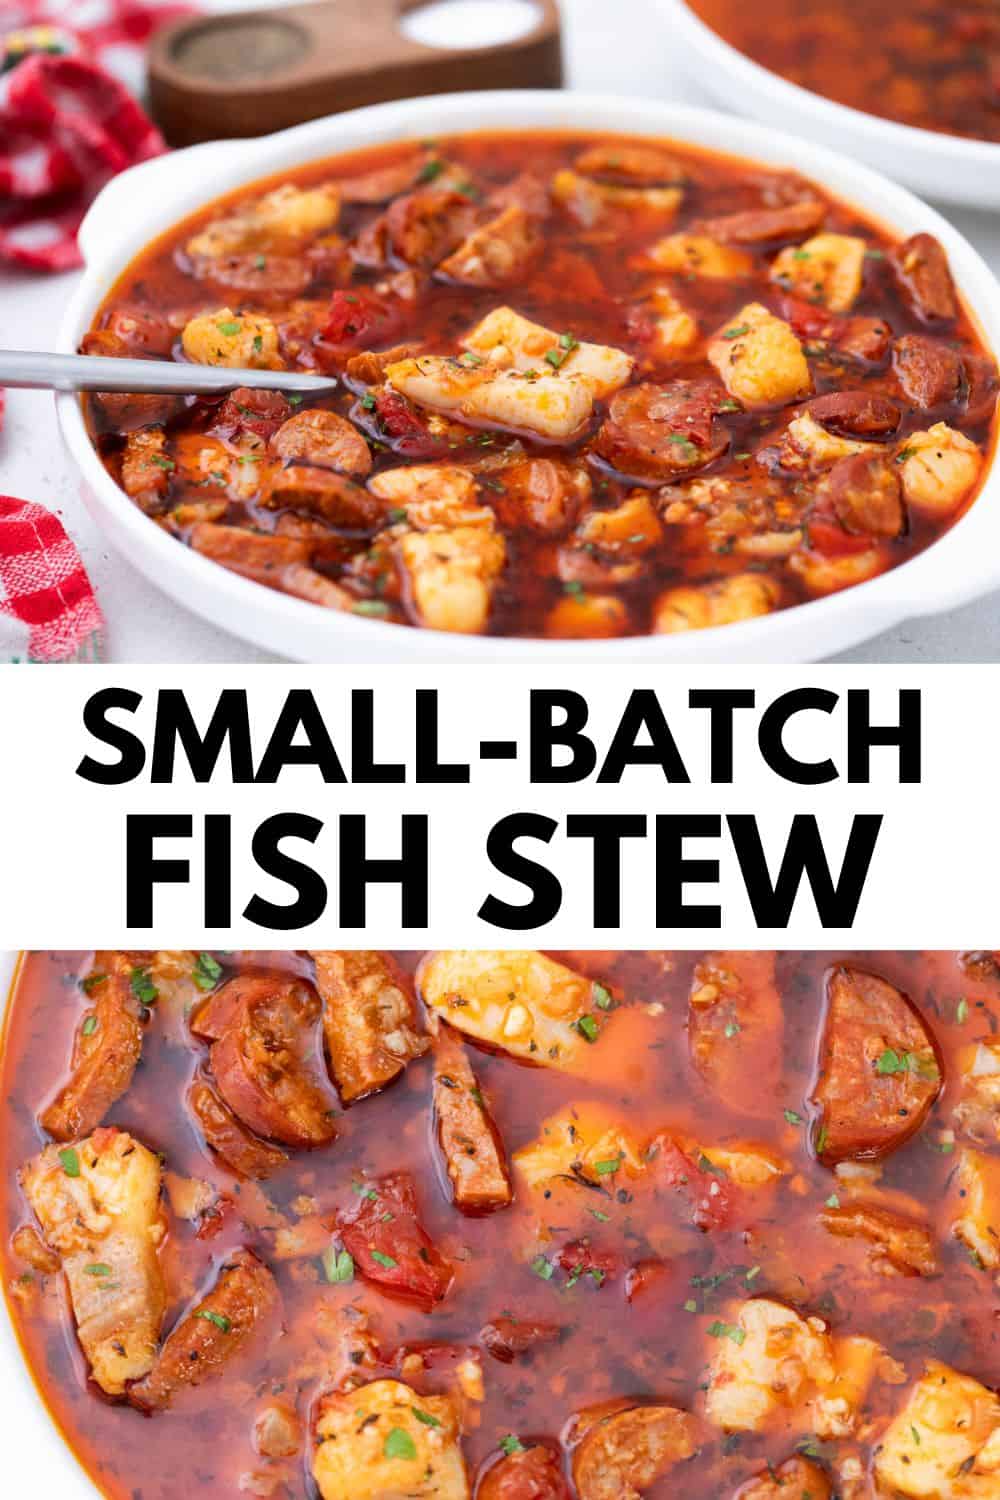 Small batch fish stew.